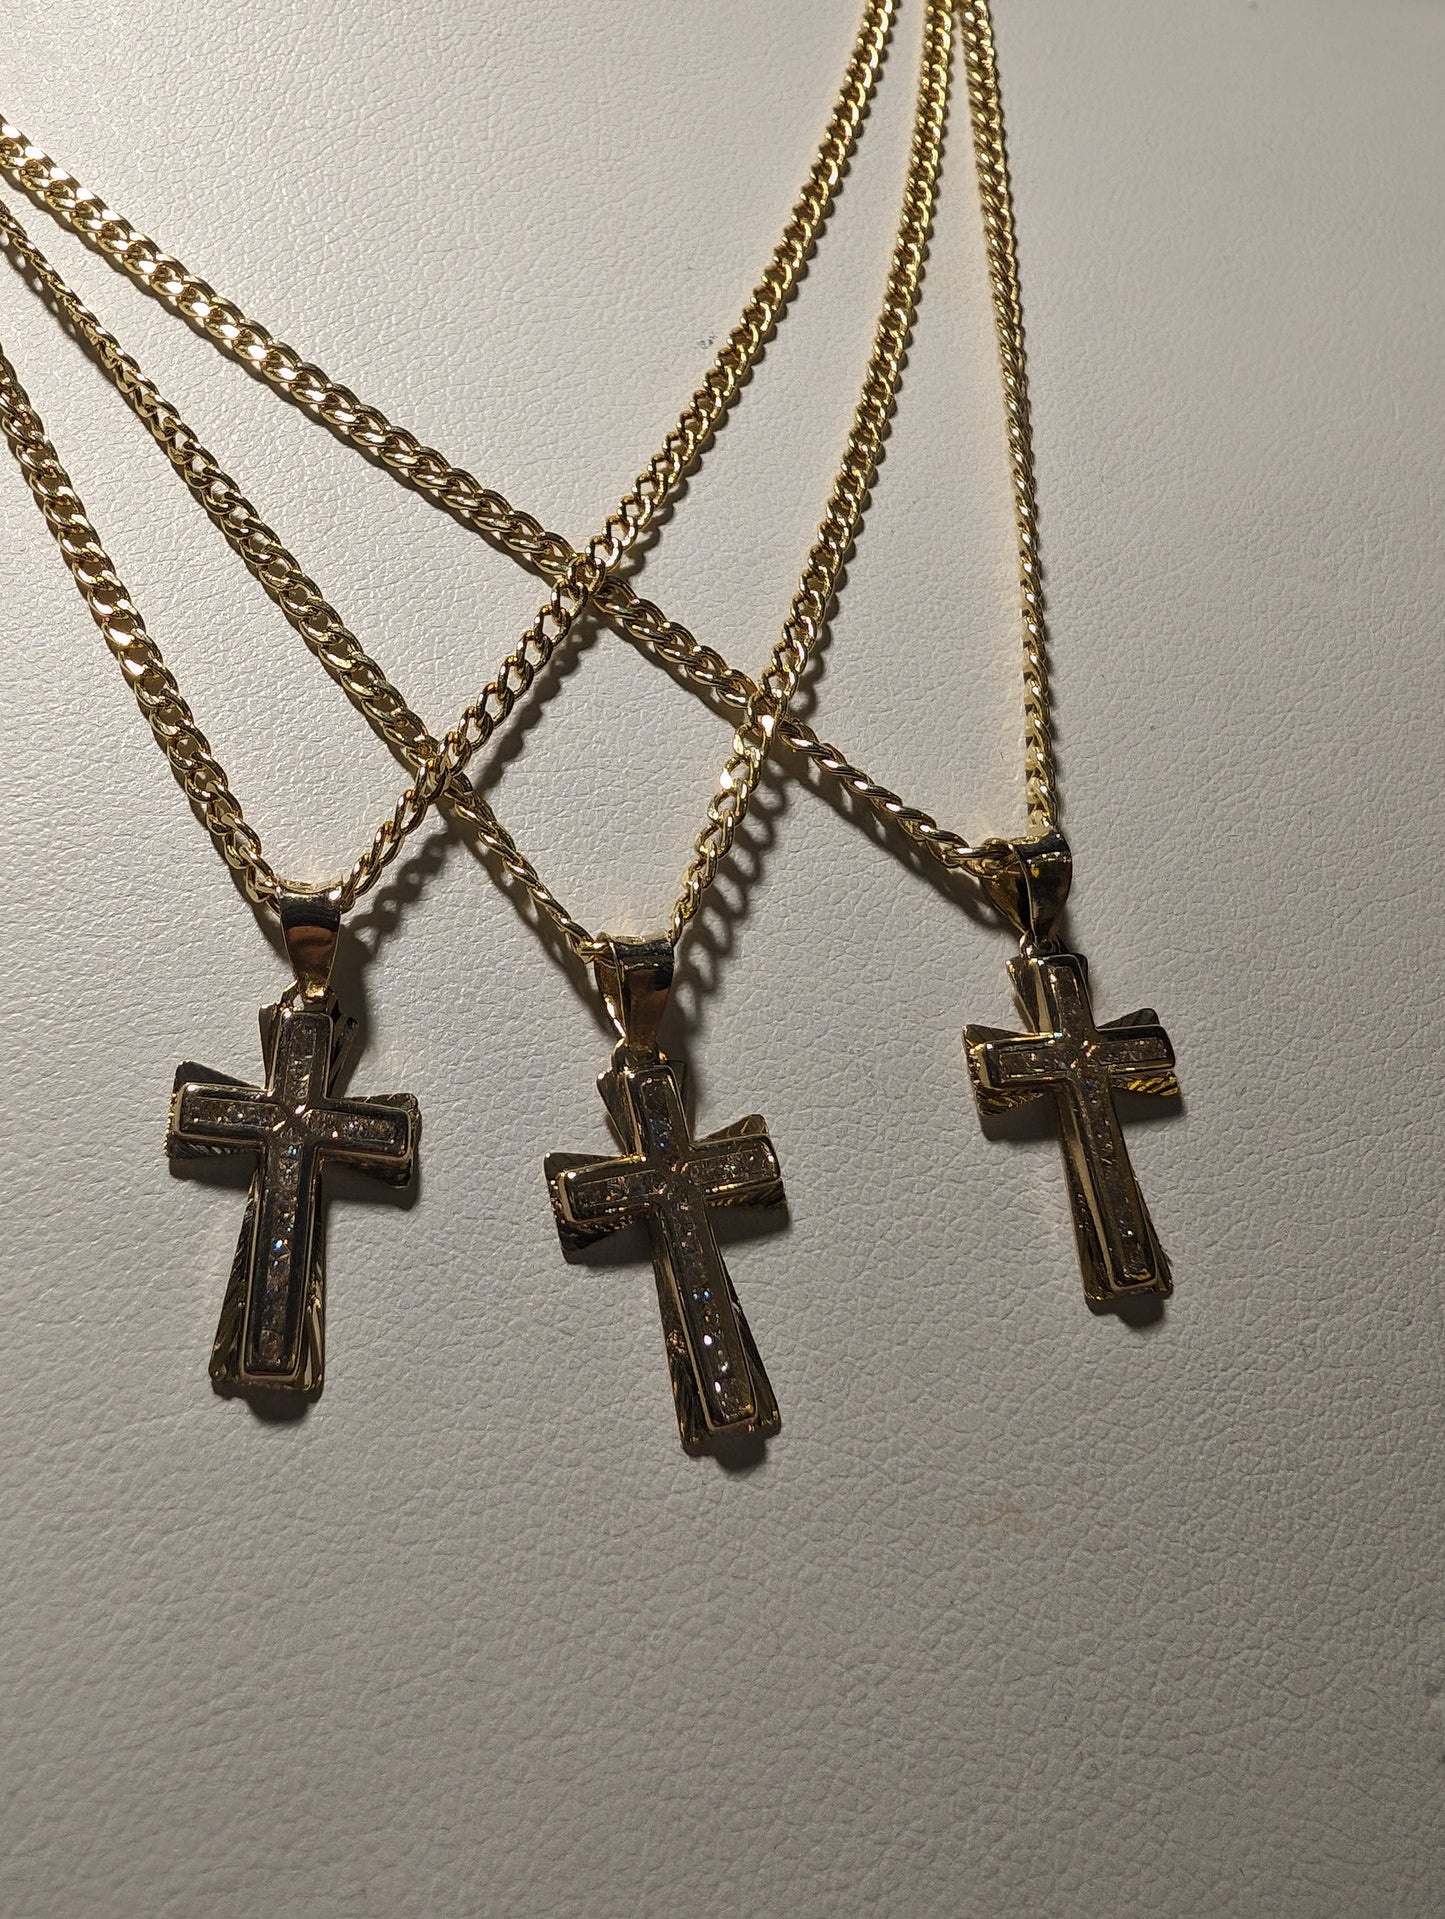 14k Cuban chain with cross pendant